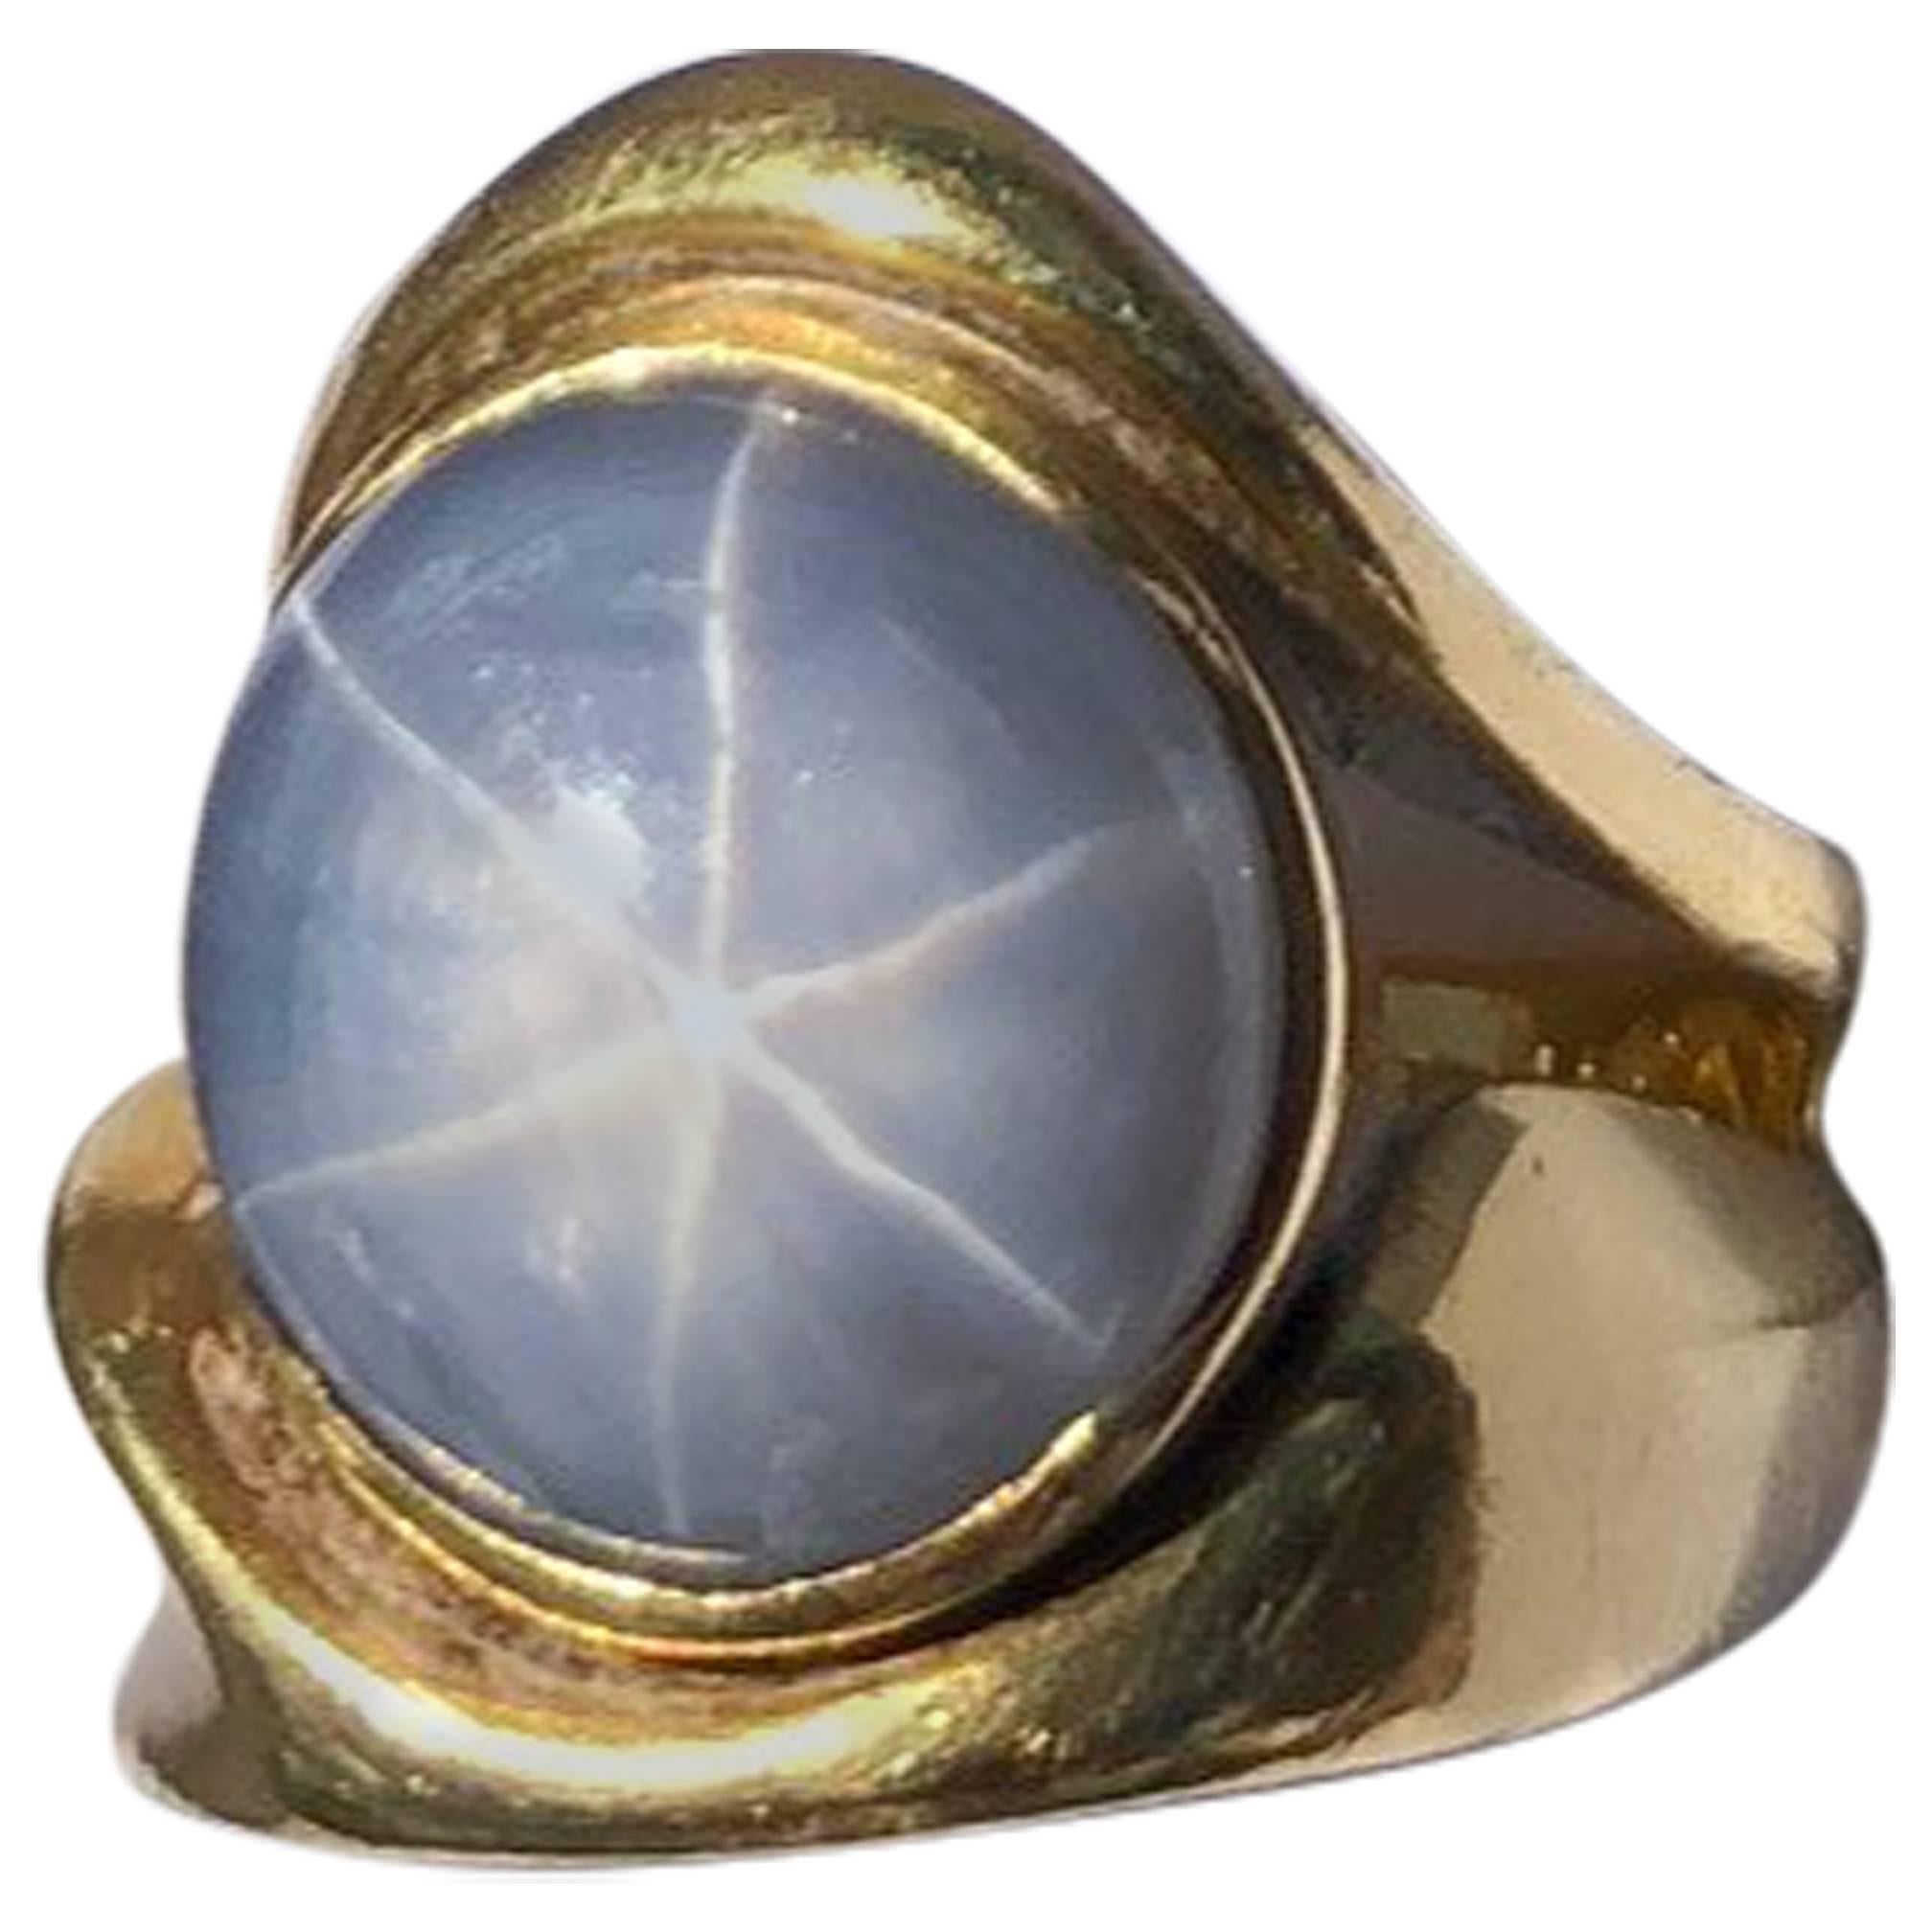 22.5 Carat “Star” Sapphire Gold Ring